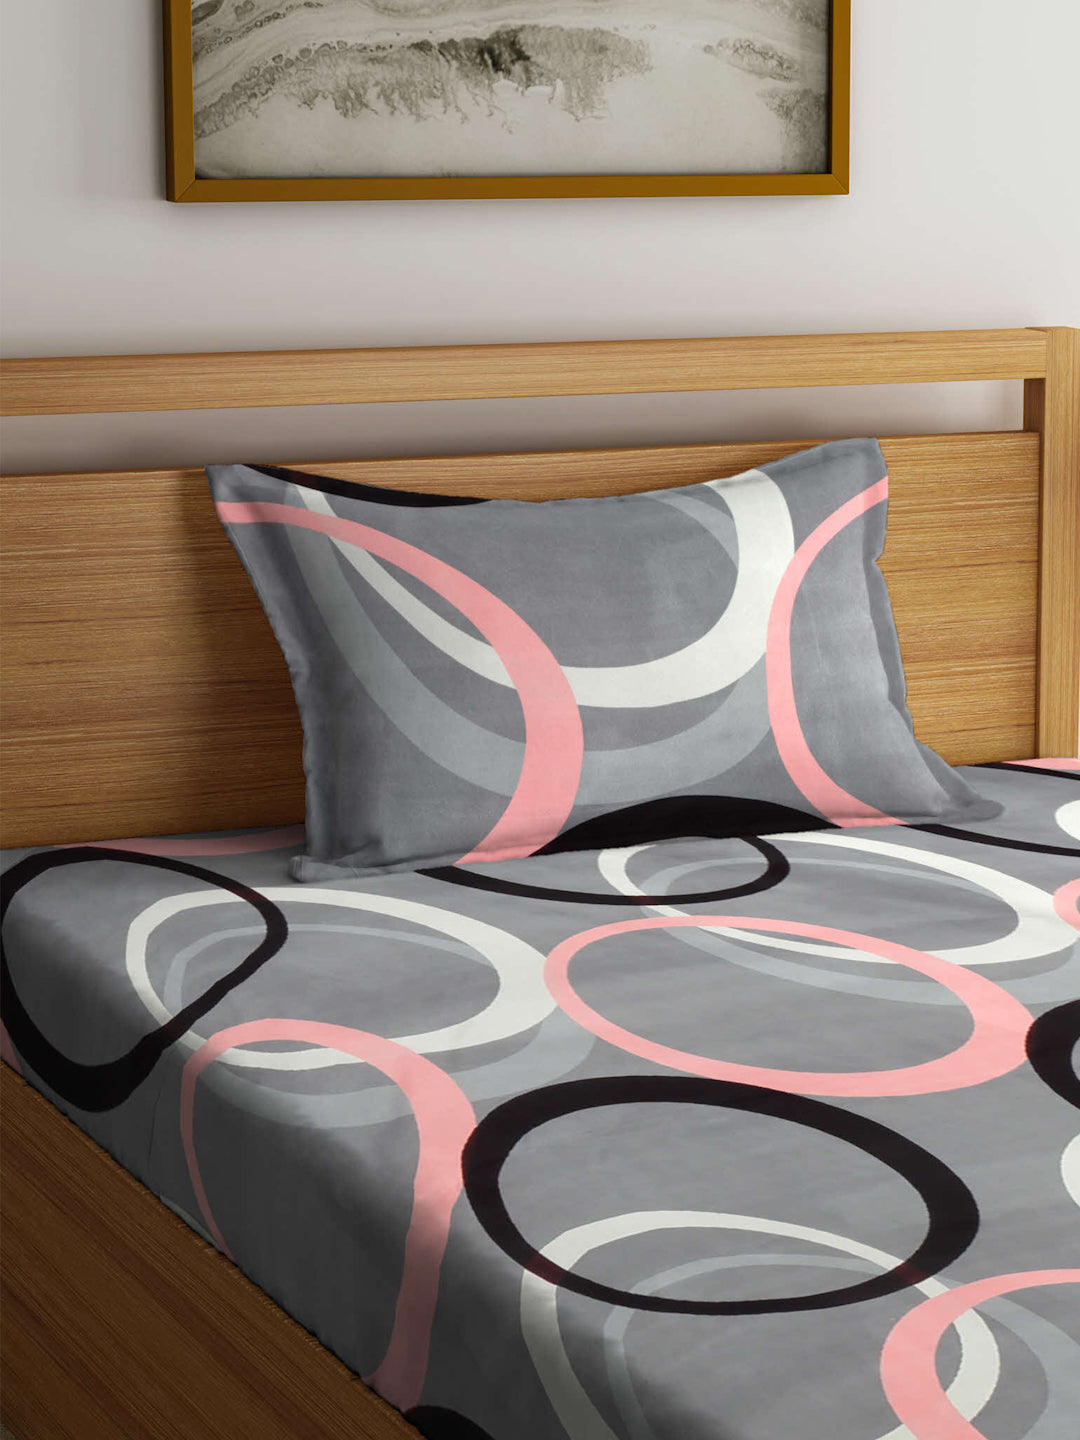 Arrabi Grey Graphic TC Cotton Blend Single Size Bedsheet with 1 Pillow Cover (215 x 150 cm)